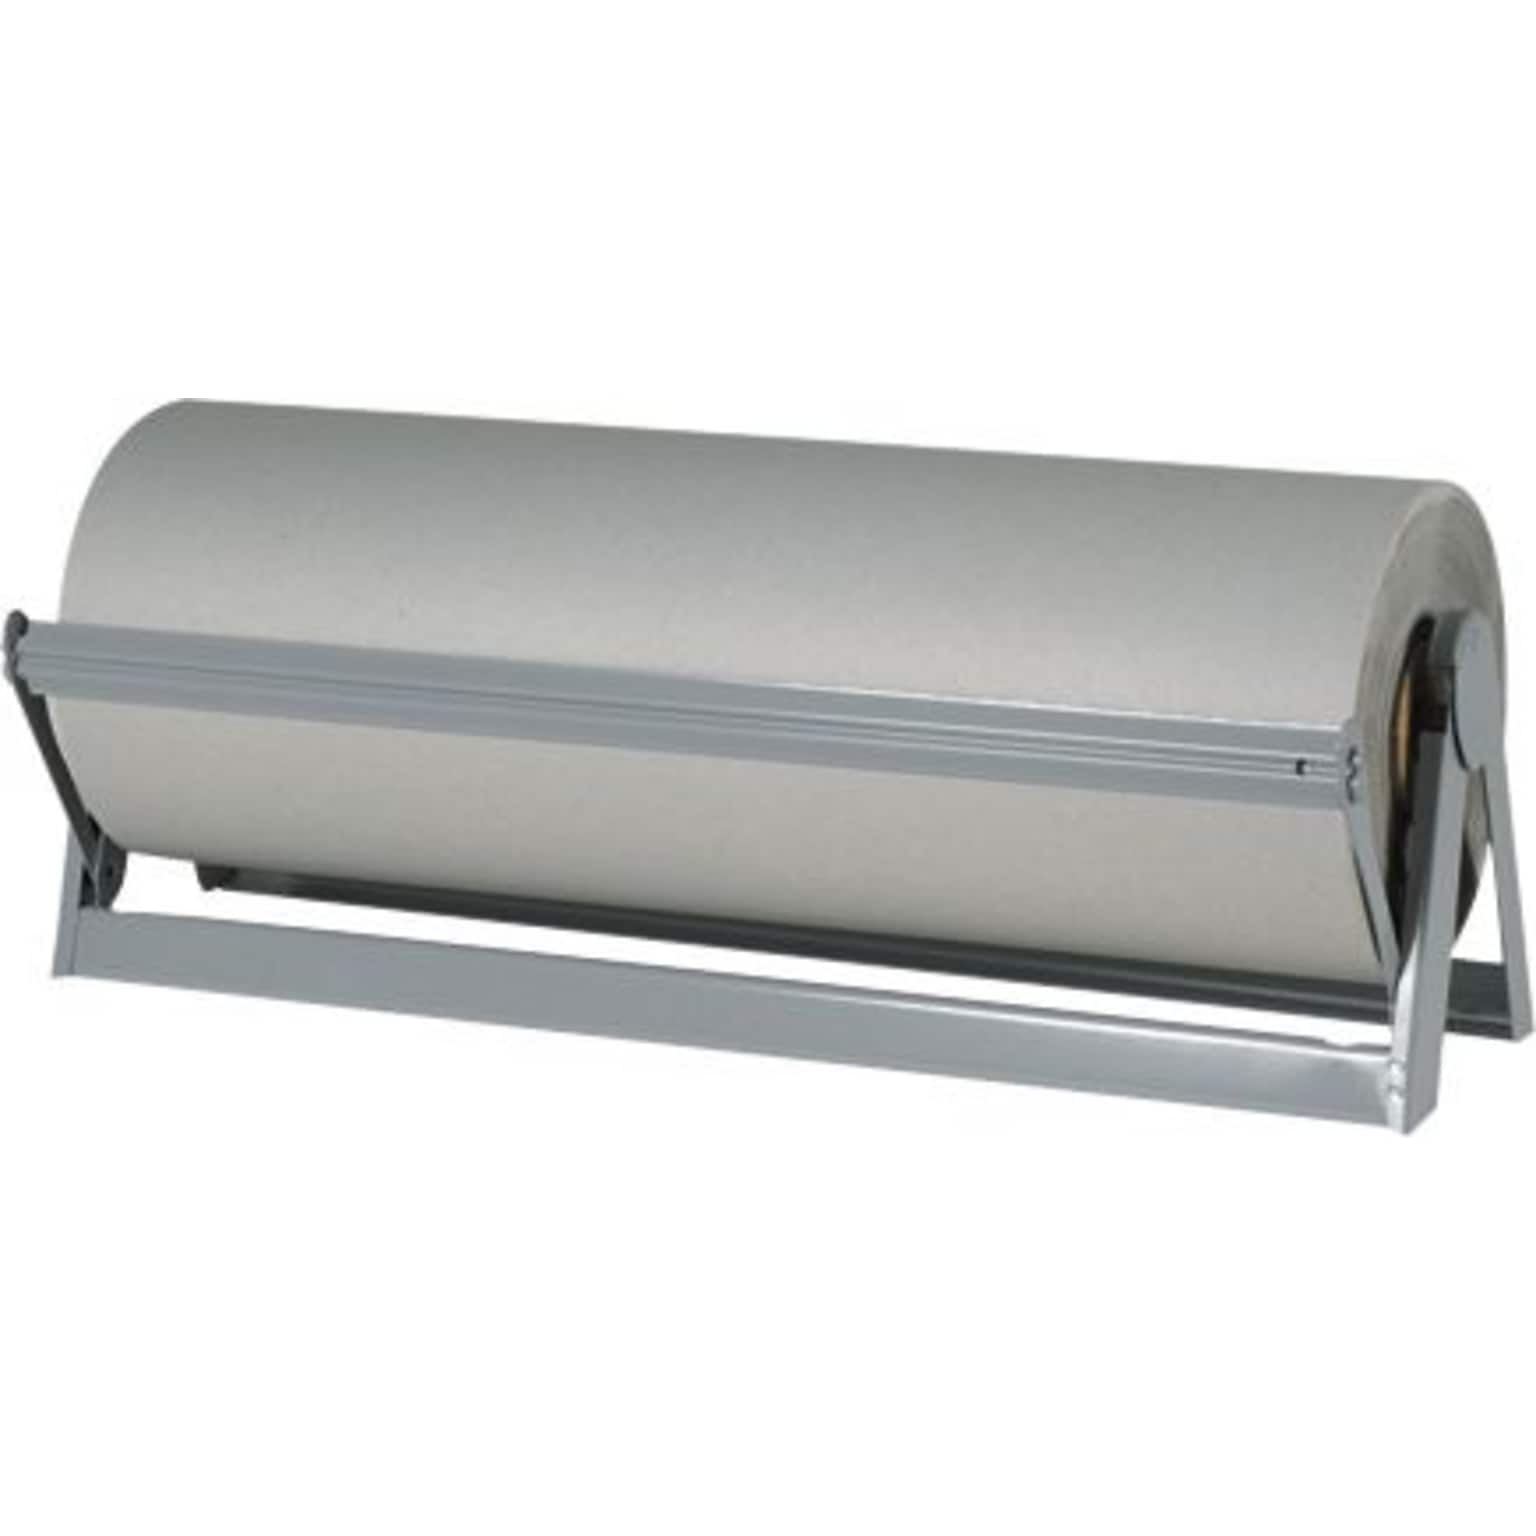 SI Products Staples Bogus Kraft Paper Roll, 50 lb., 48 x 720 (PKPB4850)